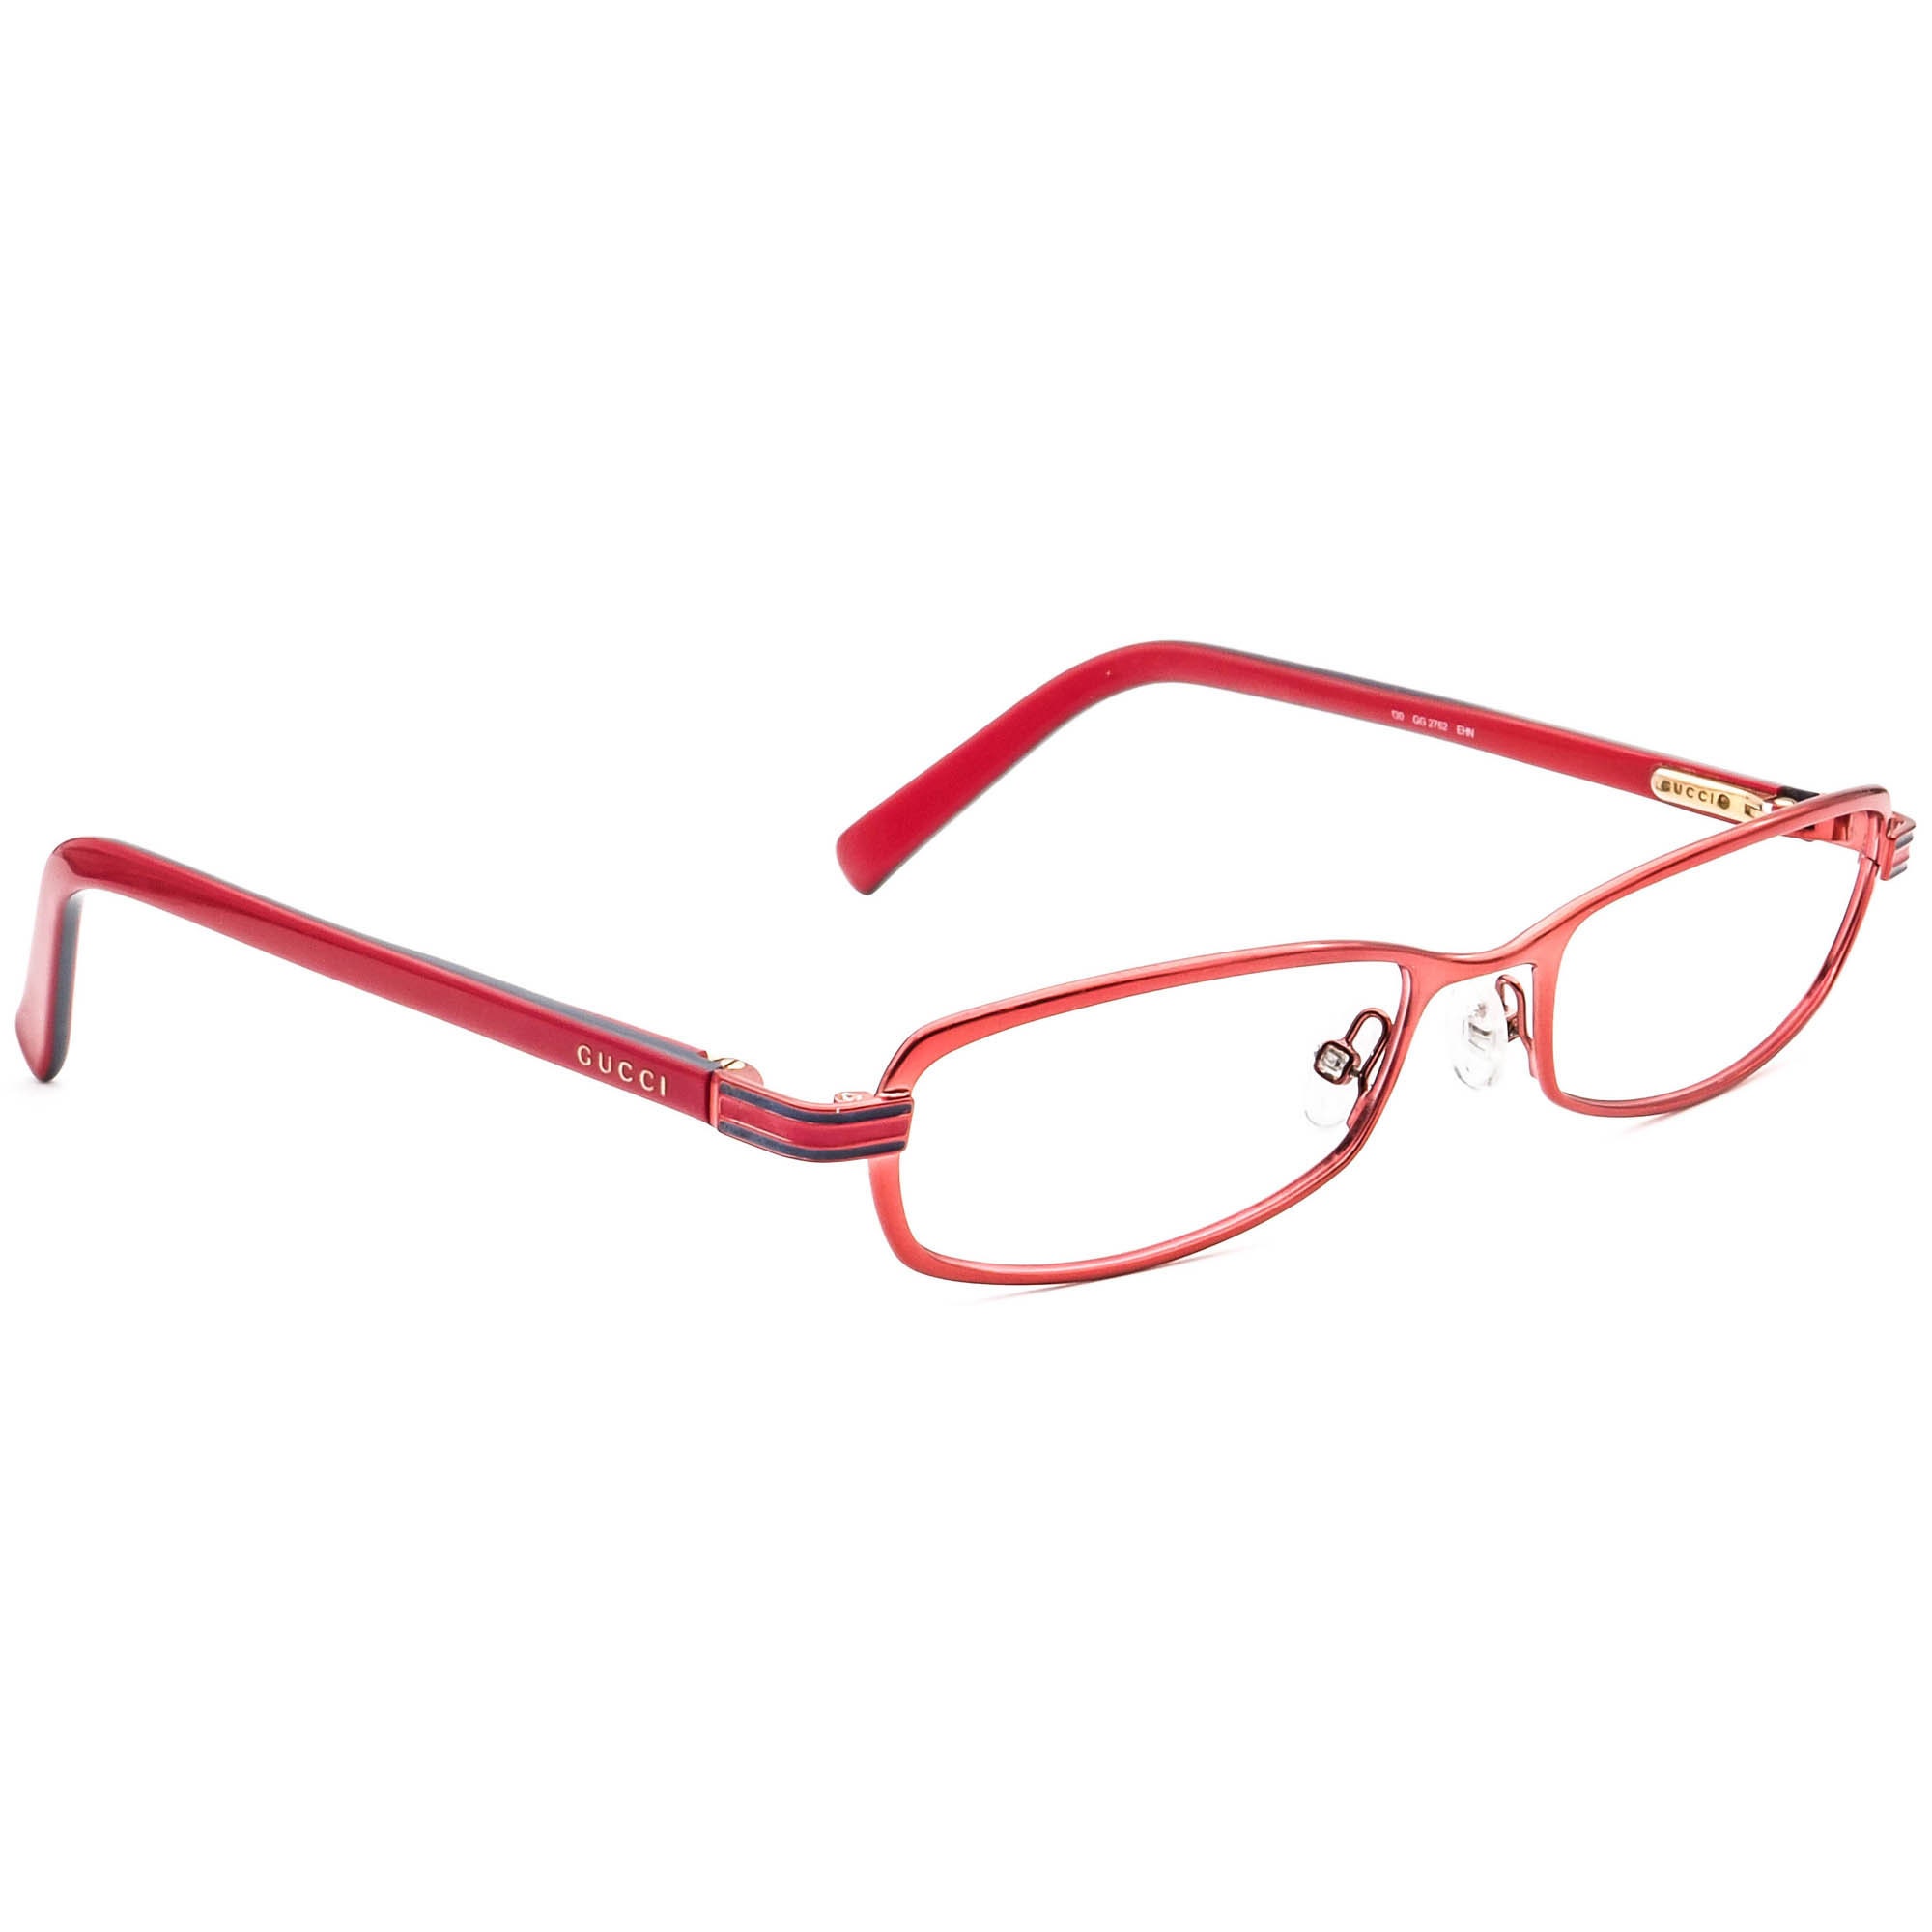 Gucci Eyeglasses GG 2762 EHN Red Rectangular Frame Italy - Etsy